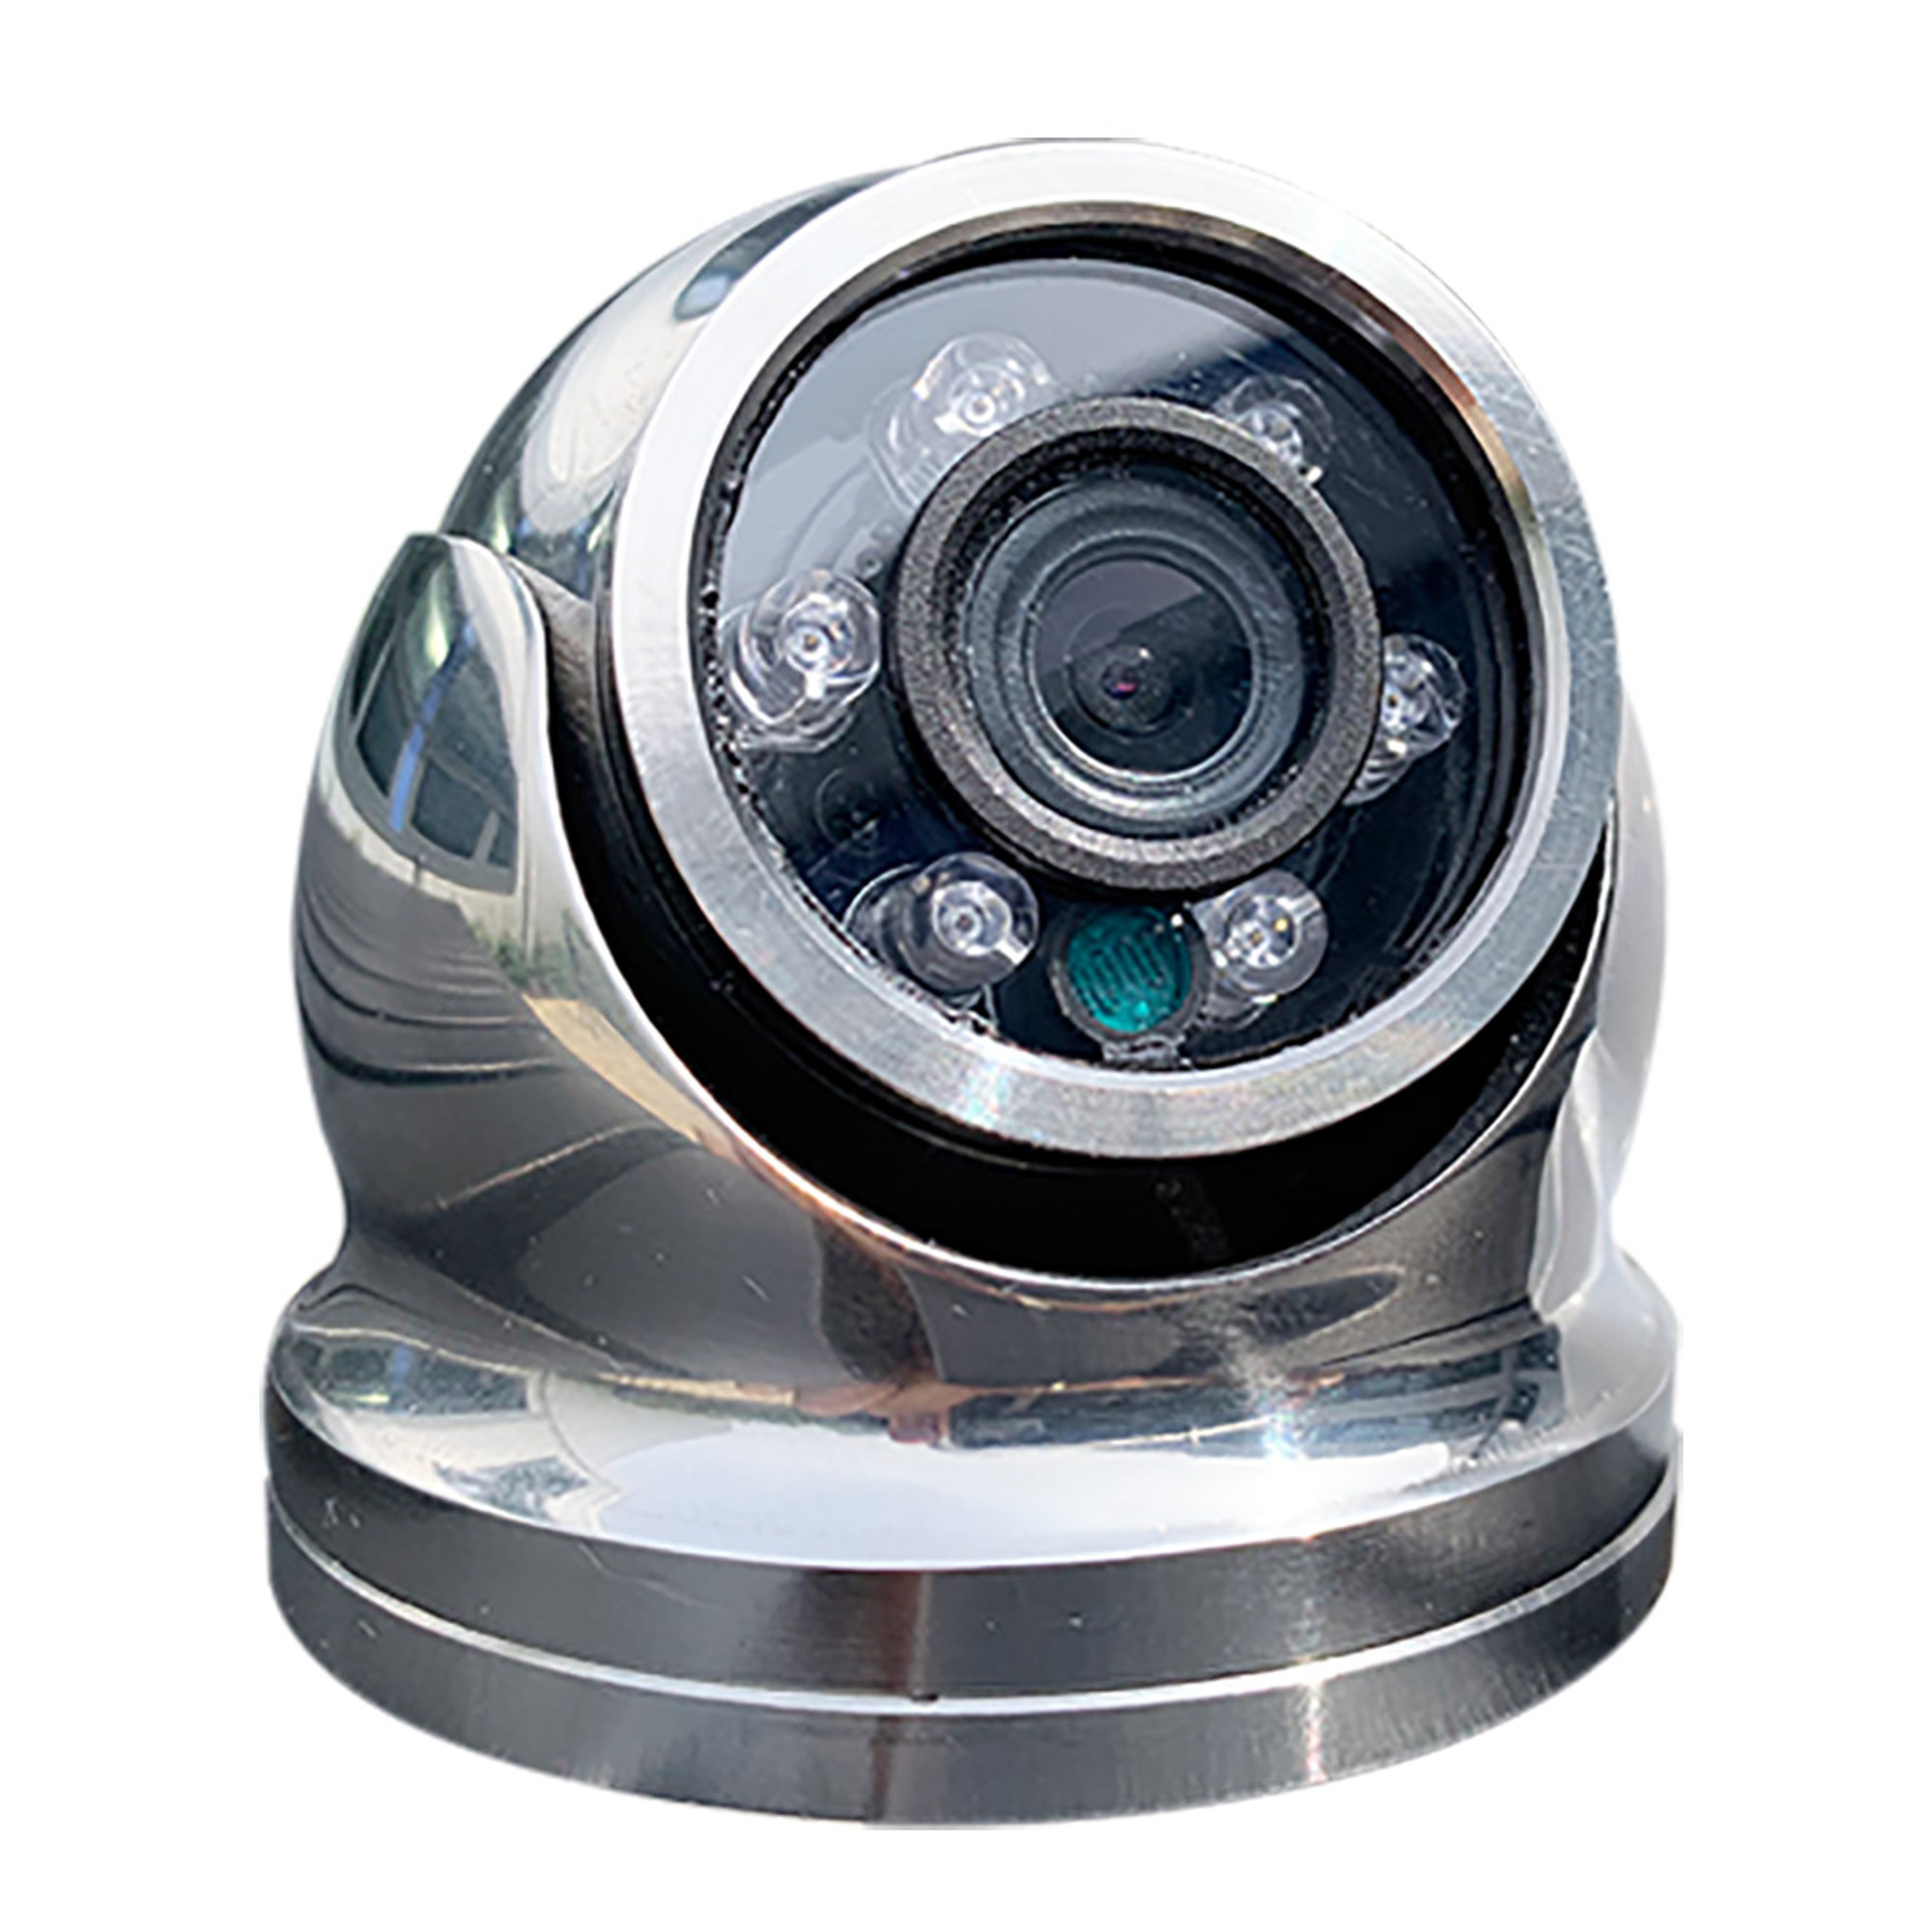 Iris High Definition 3MP IP Mini Dome Camera - 2MP Resolution - 316 SS & 80-Degree HFOV - 3.6mm Lens